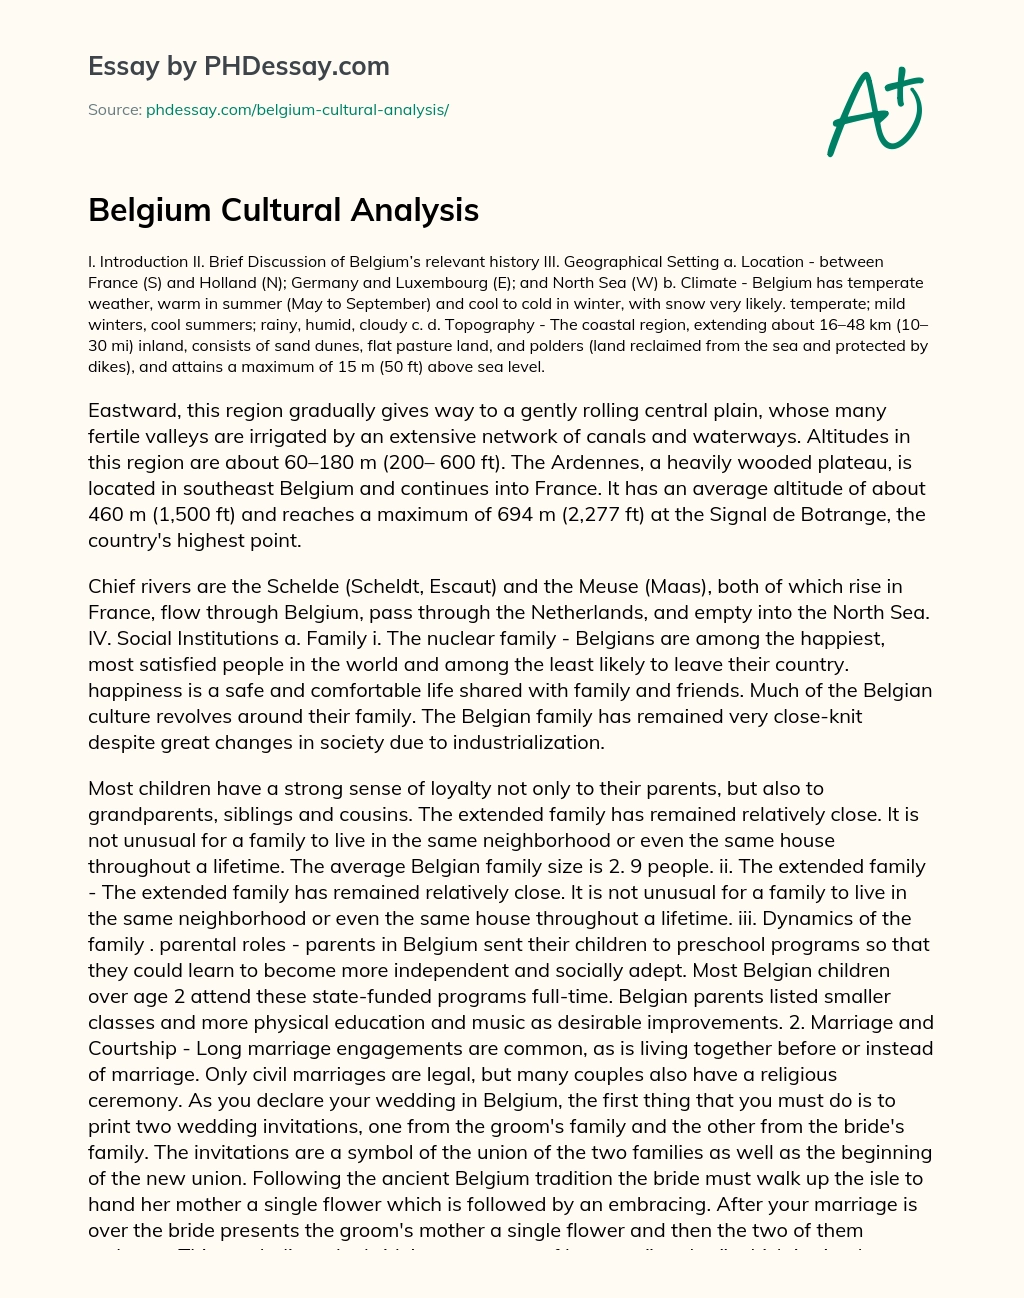 Belgium Cultural Analysis essay